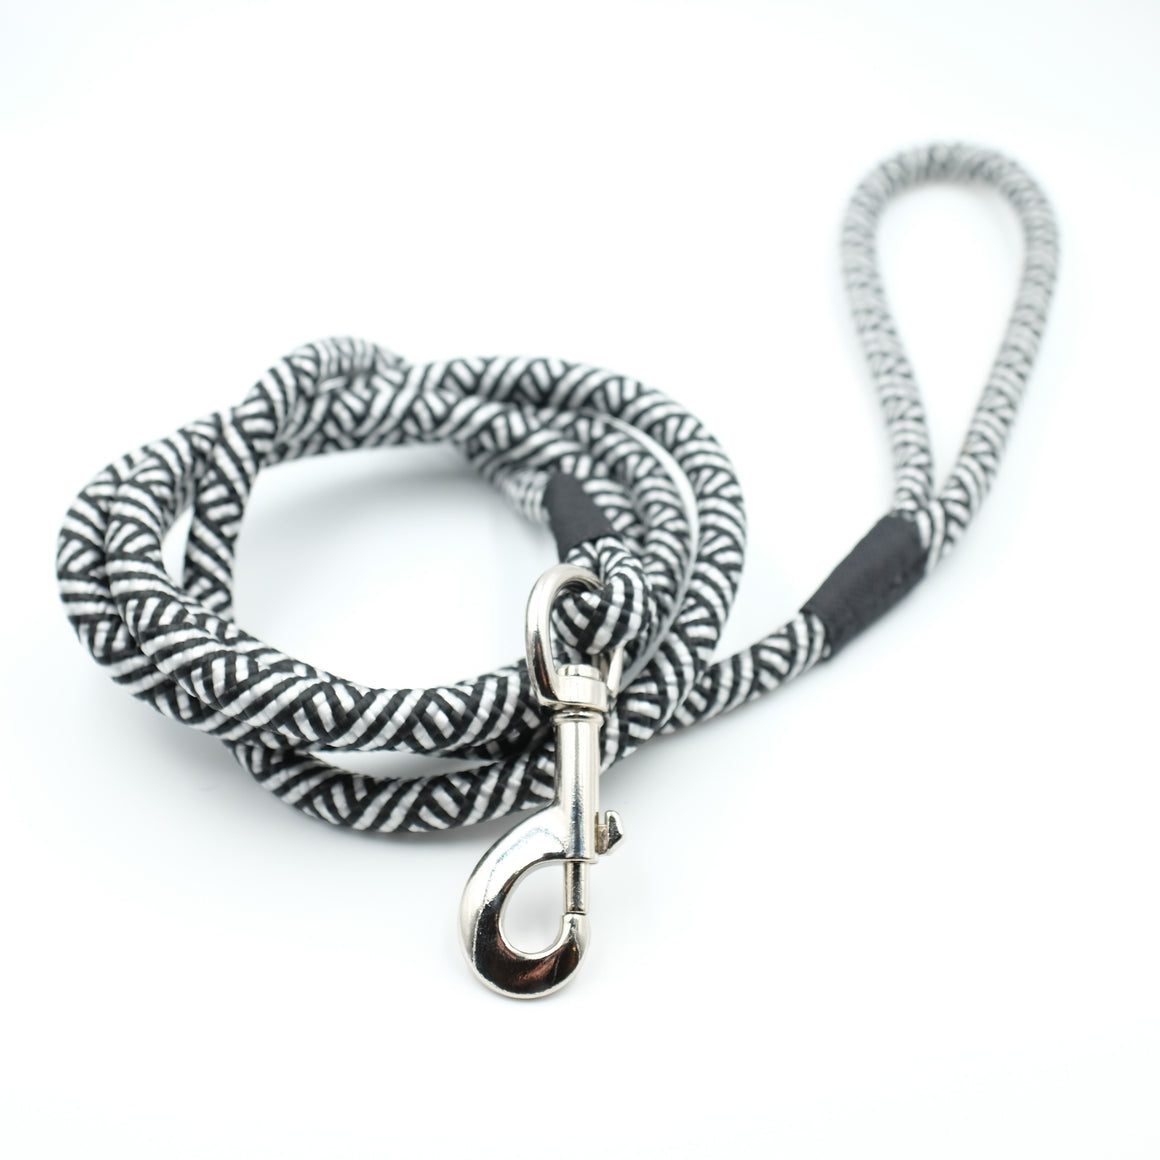 Black & White Rope Dog Leash, 4 foot